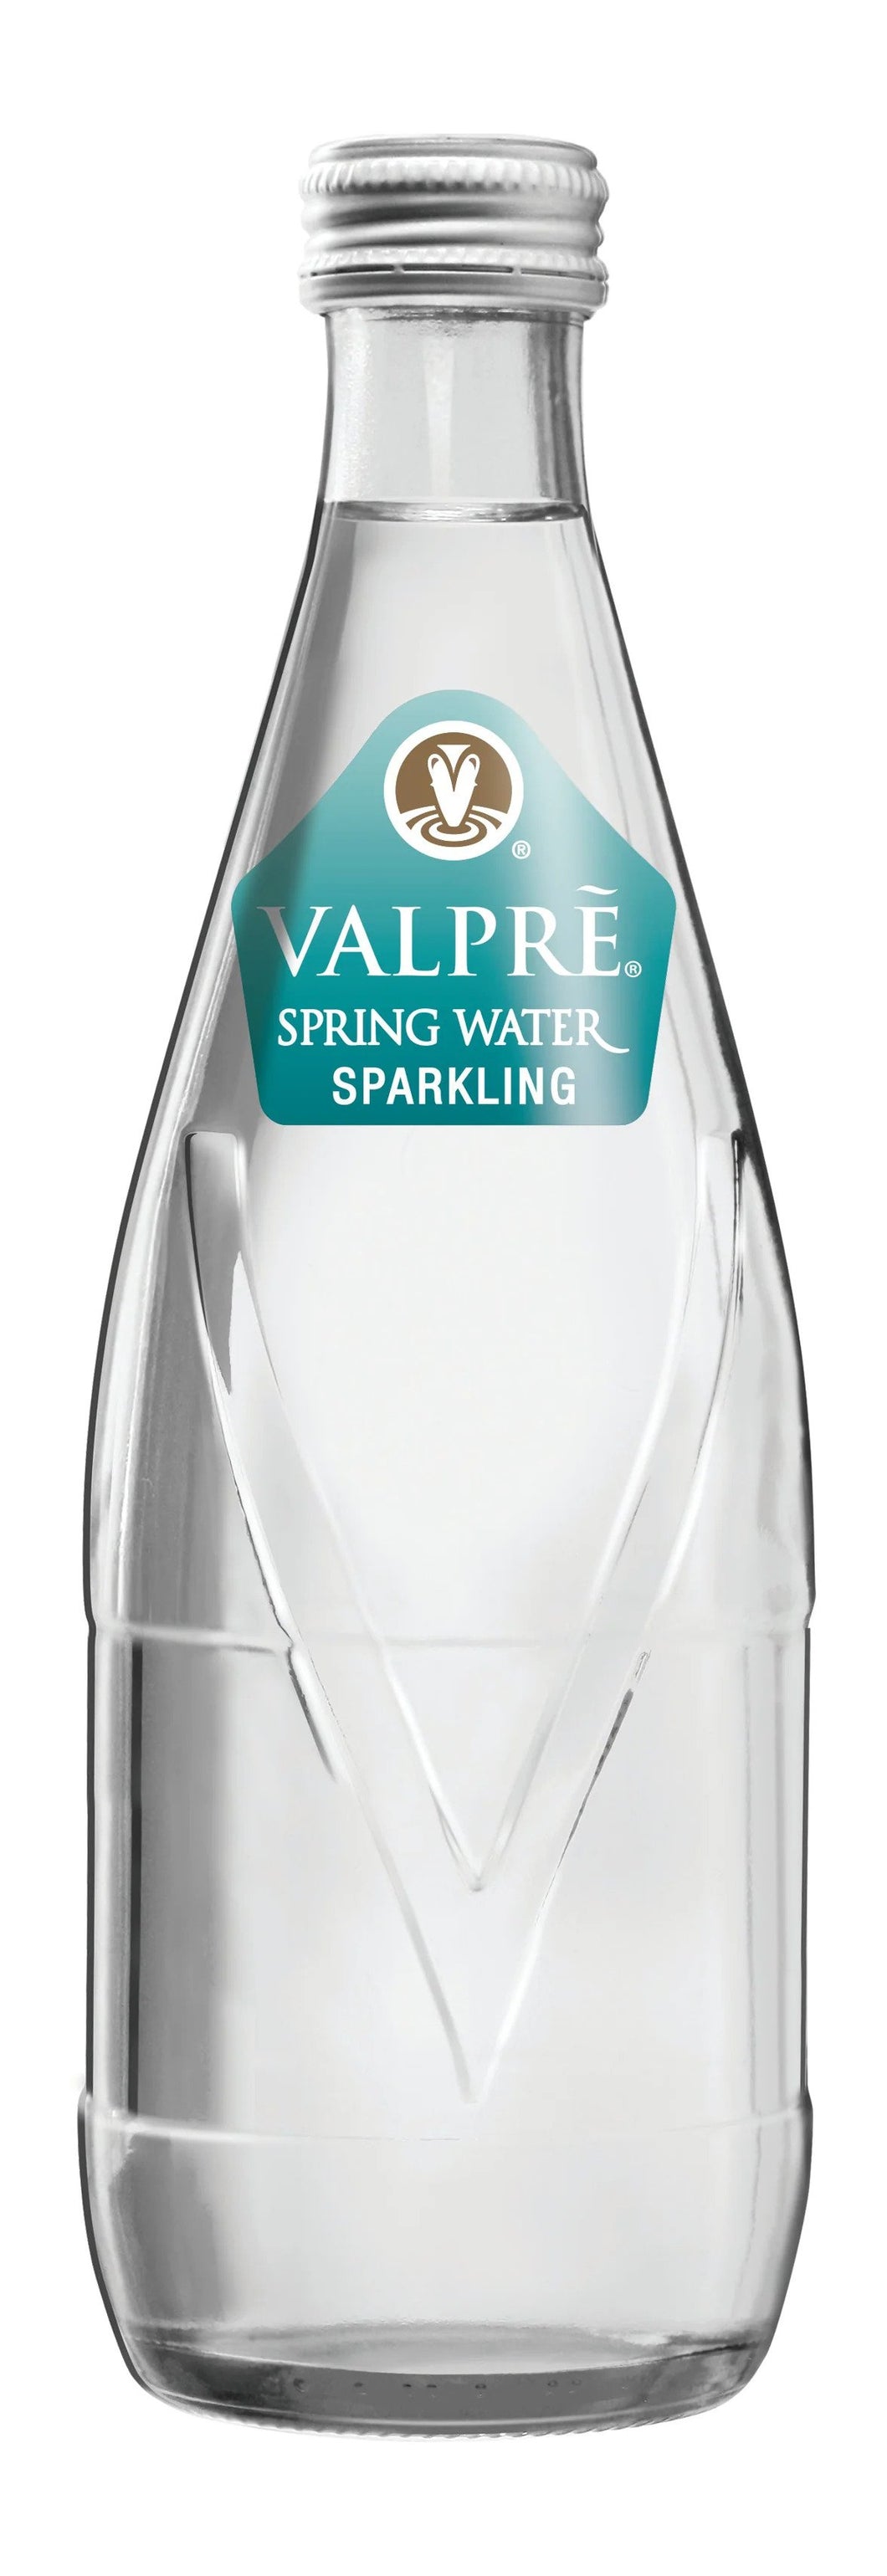 VALPRE SPARKLING 750ML GLASS